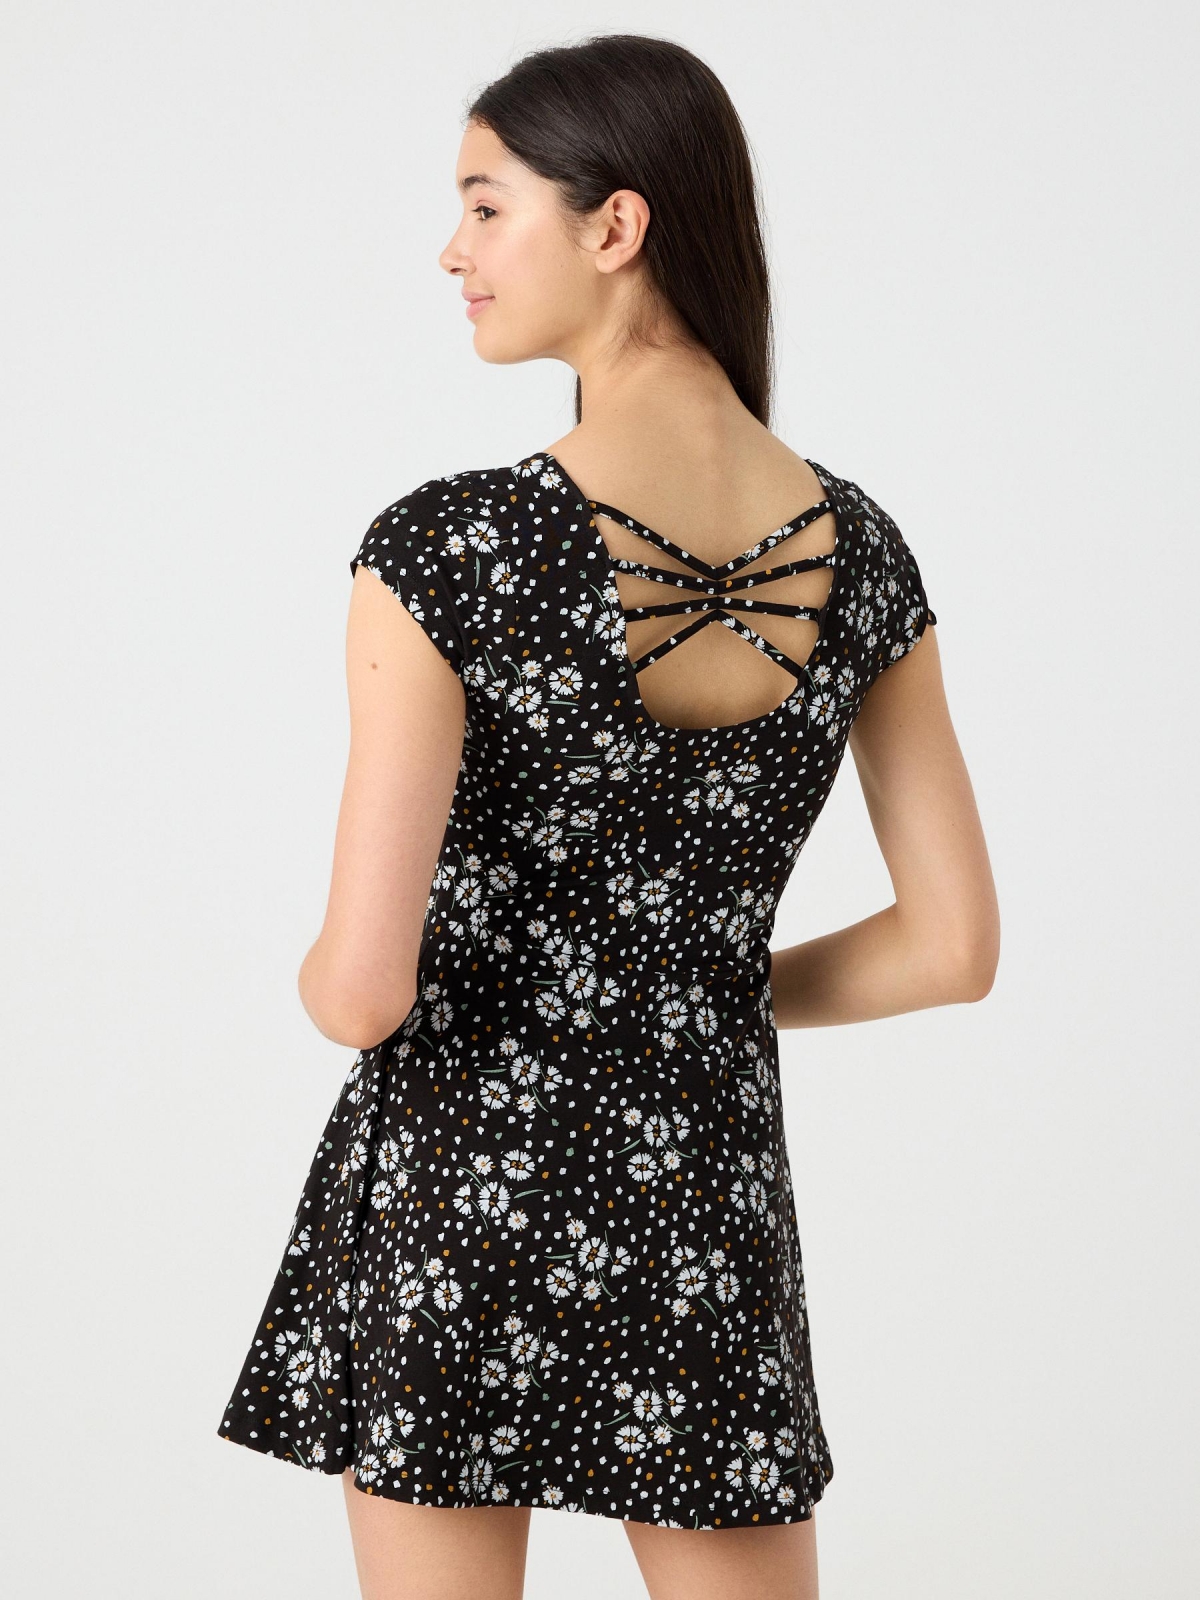 Vestido floral espalda tiras negro vista media trasera